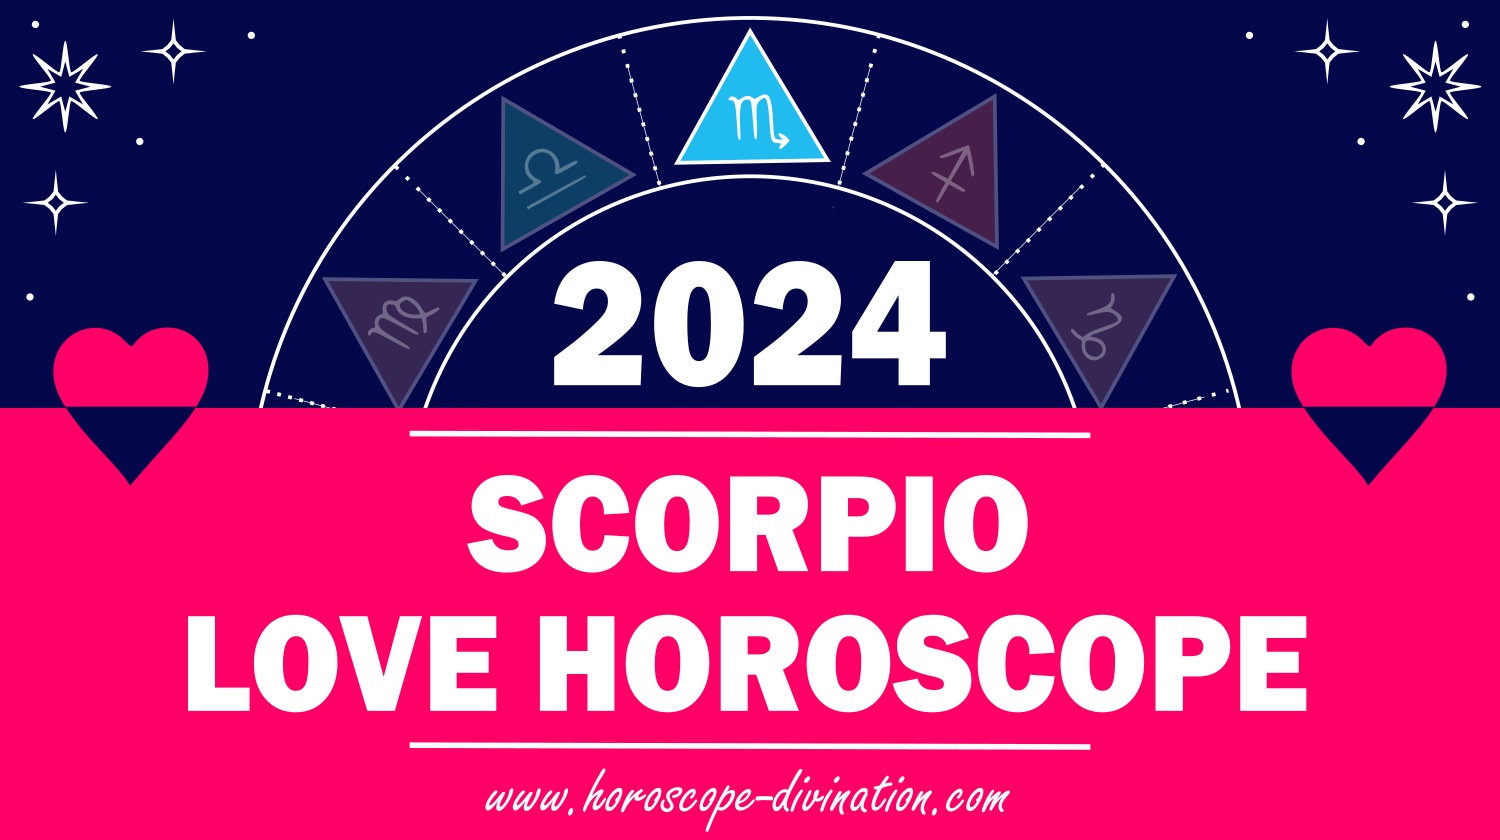 Scorpio Love Horoscope 2024 Love & Relationships prediction